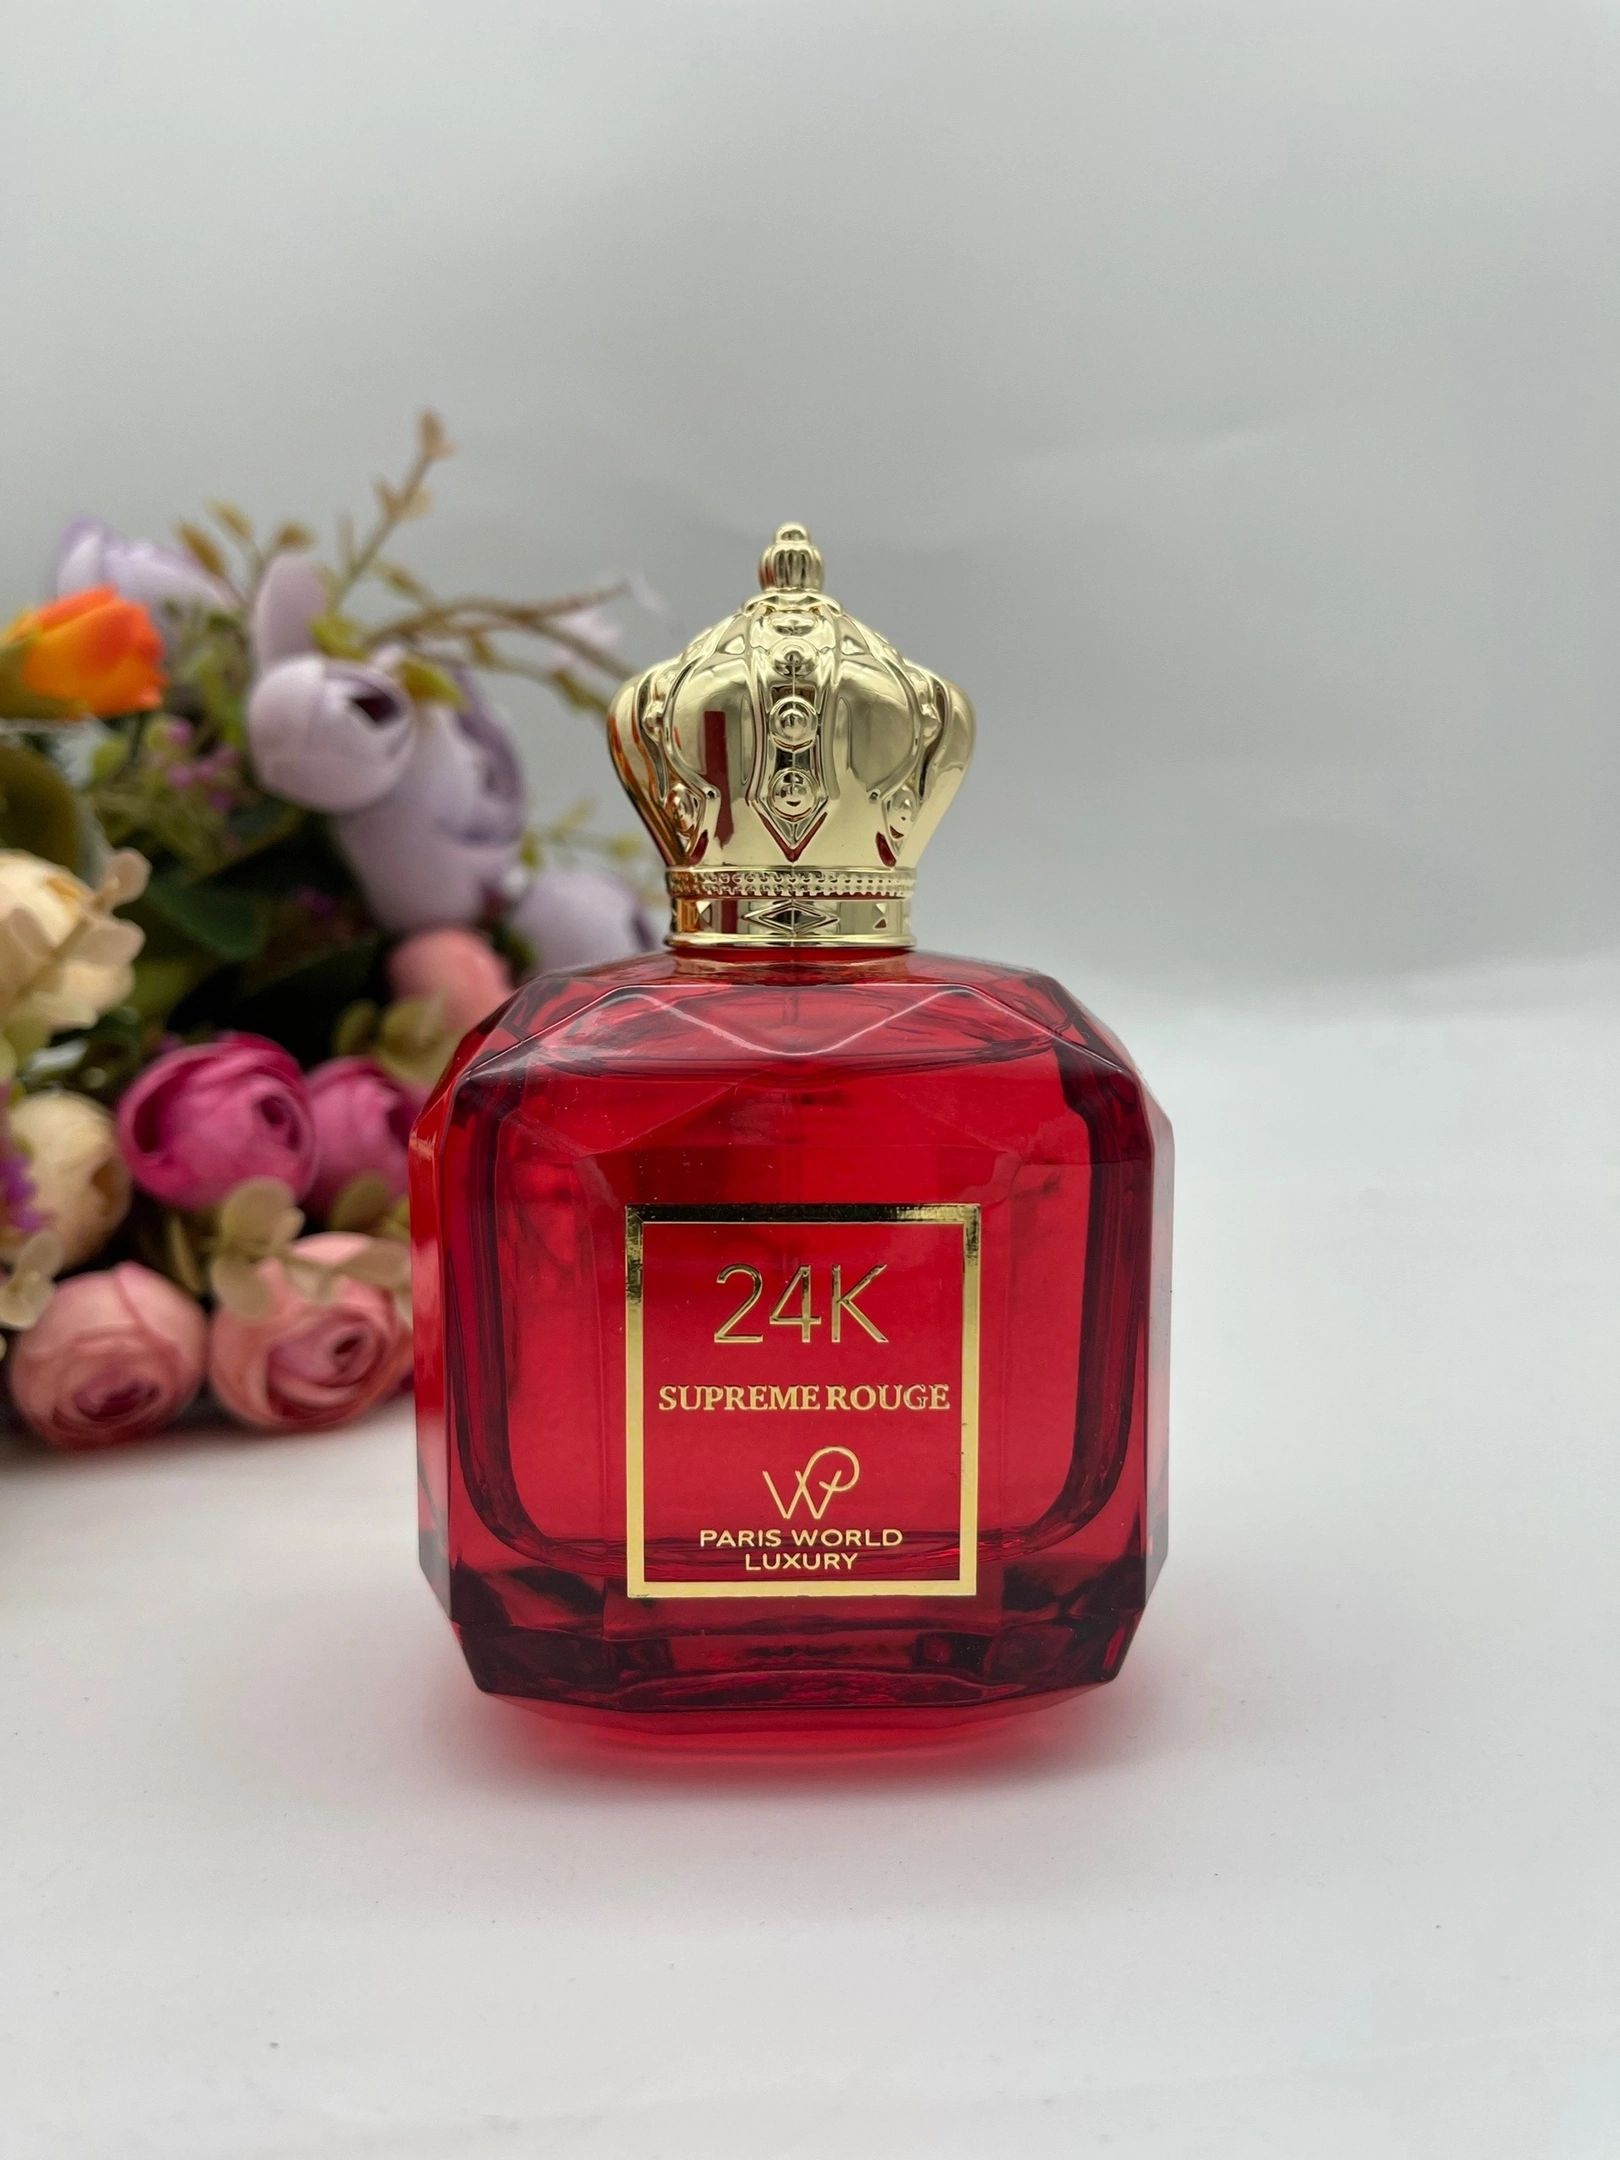 24k supreme rouge world luxury. Paris World Luxury 24k Supreme rouge. Supreme rouge 24k крышка оригинал. Paris World Luxury 24k Supreme Gold Almas Pink. Initio Supreme rouge.